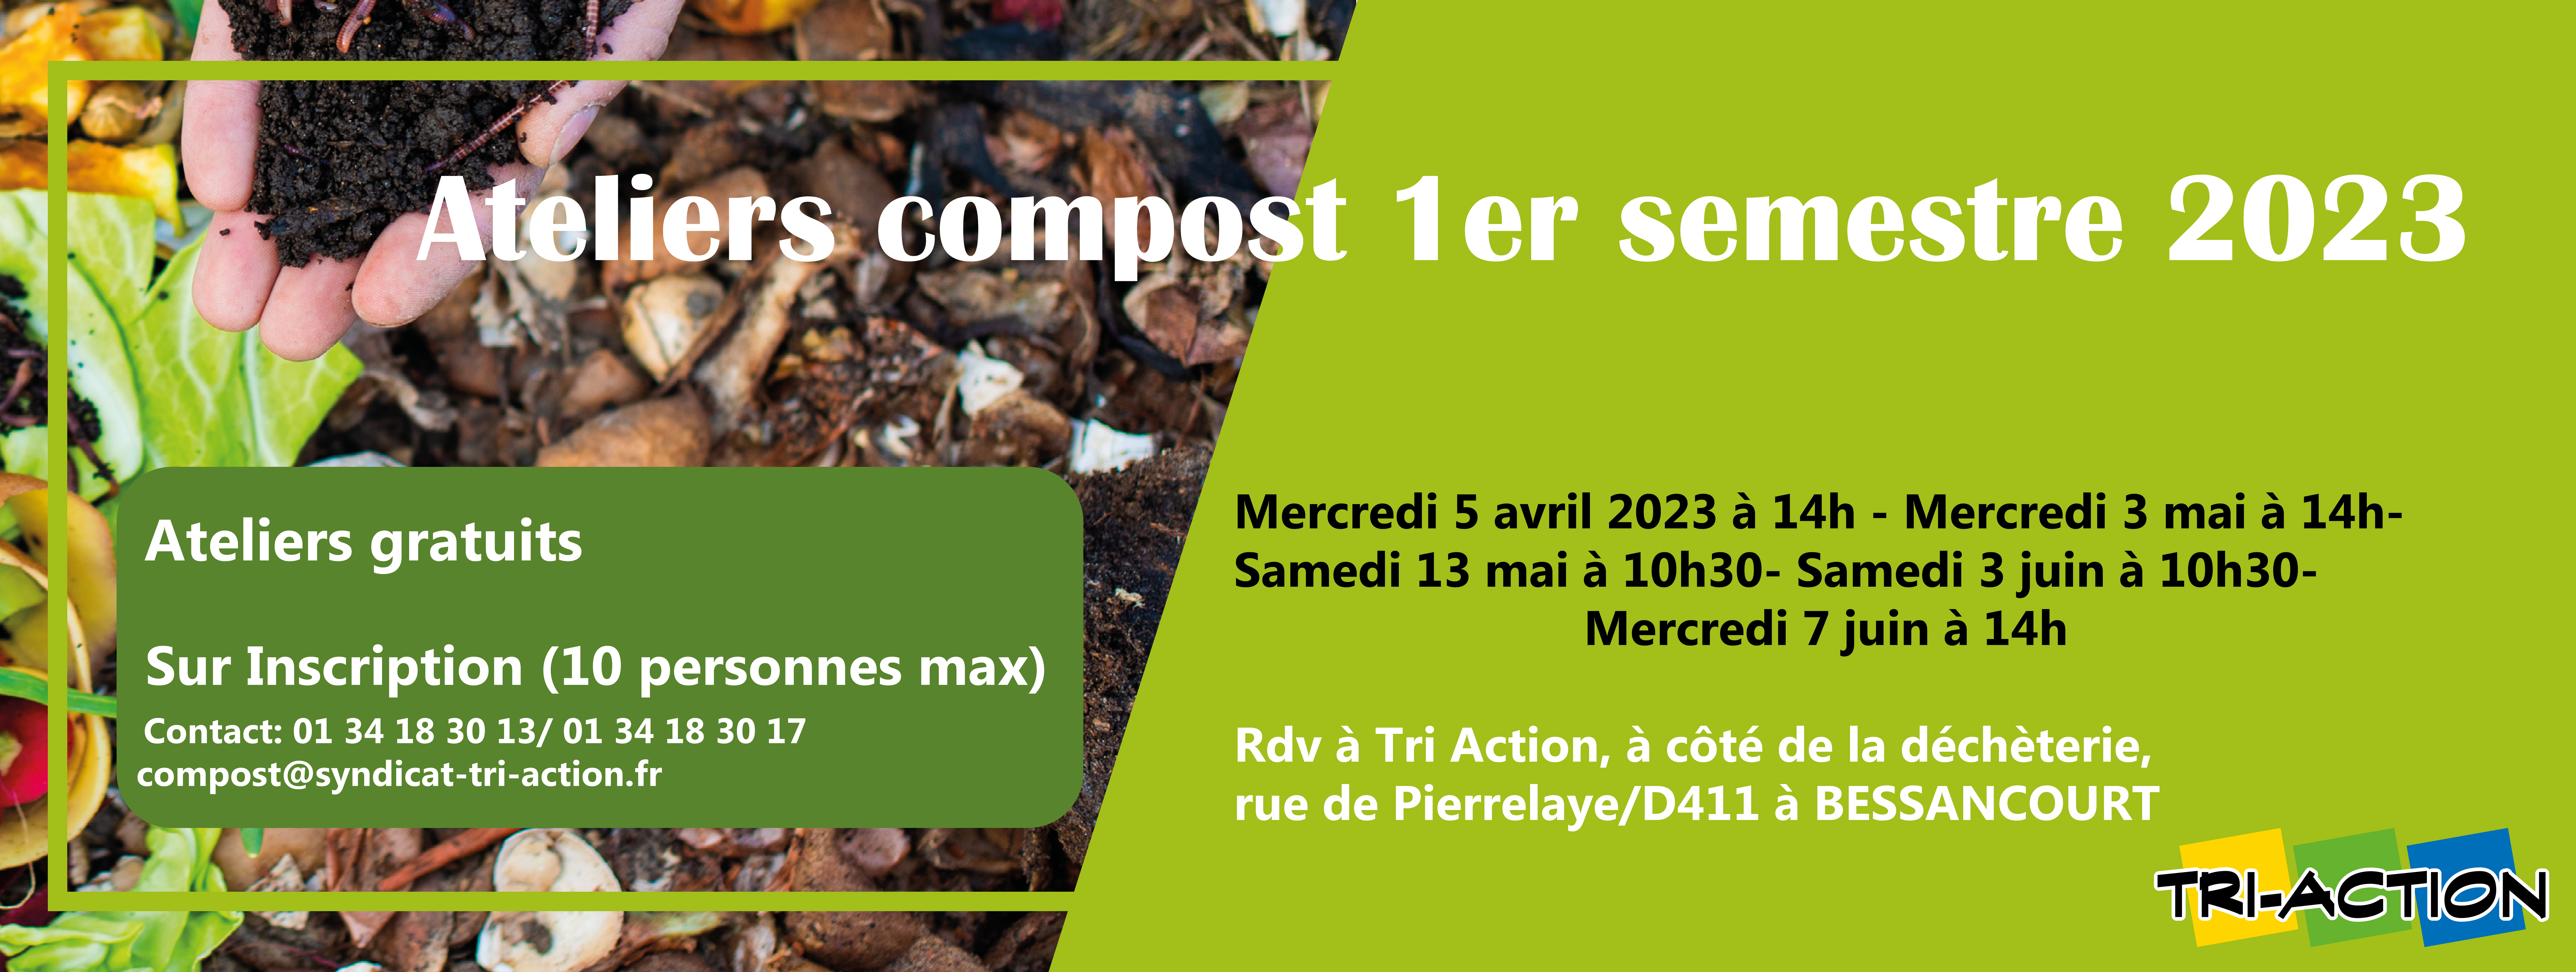 Ateliers compostage 1er semestre 2023